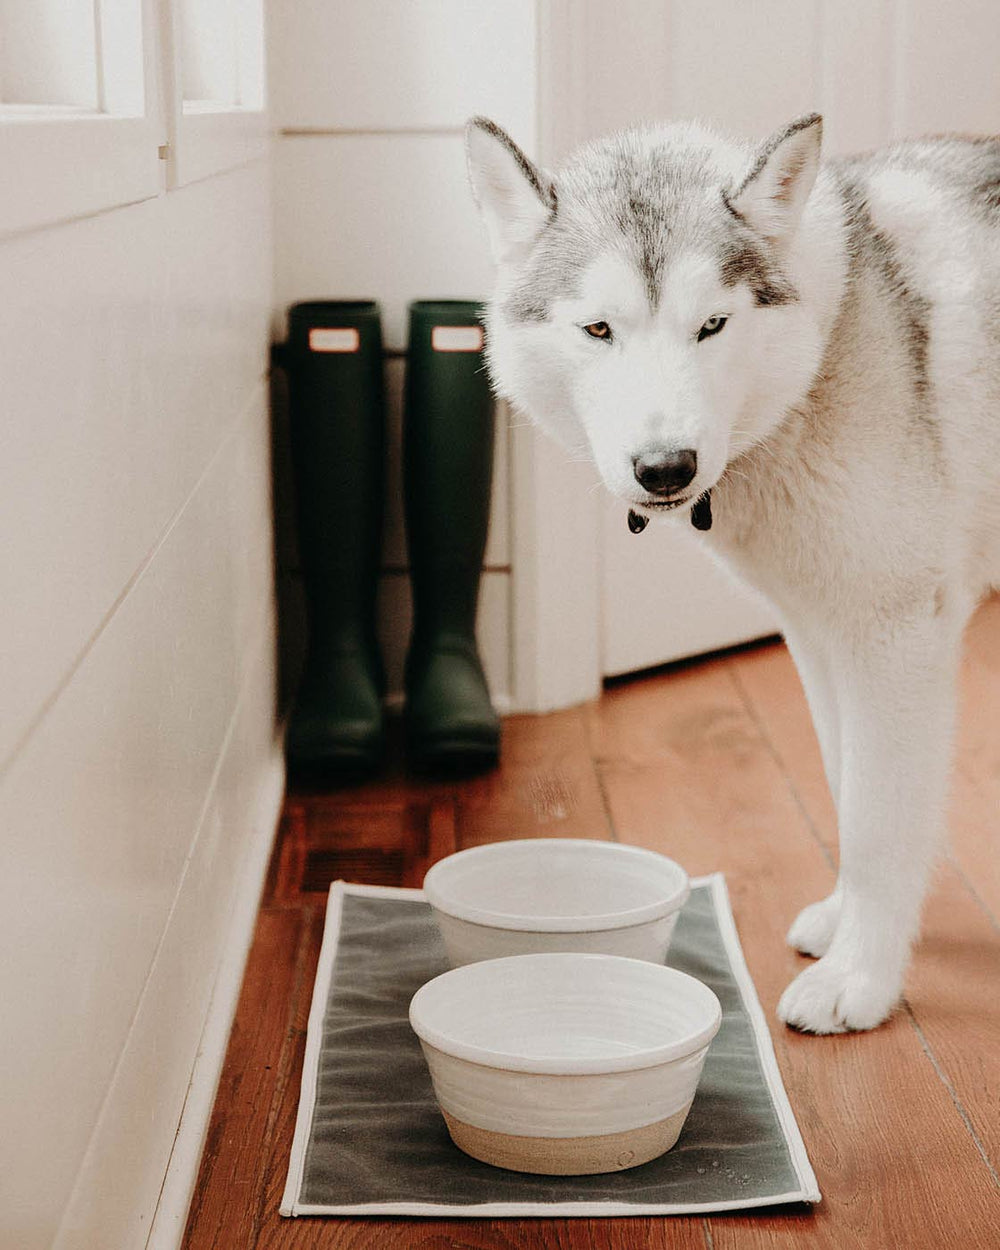 SWEEJAR Gradient Dog Bowl, Ceramic Dog Food Dish for Large Dogs and La –  Sweejar Home